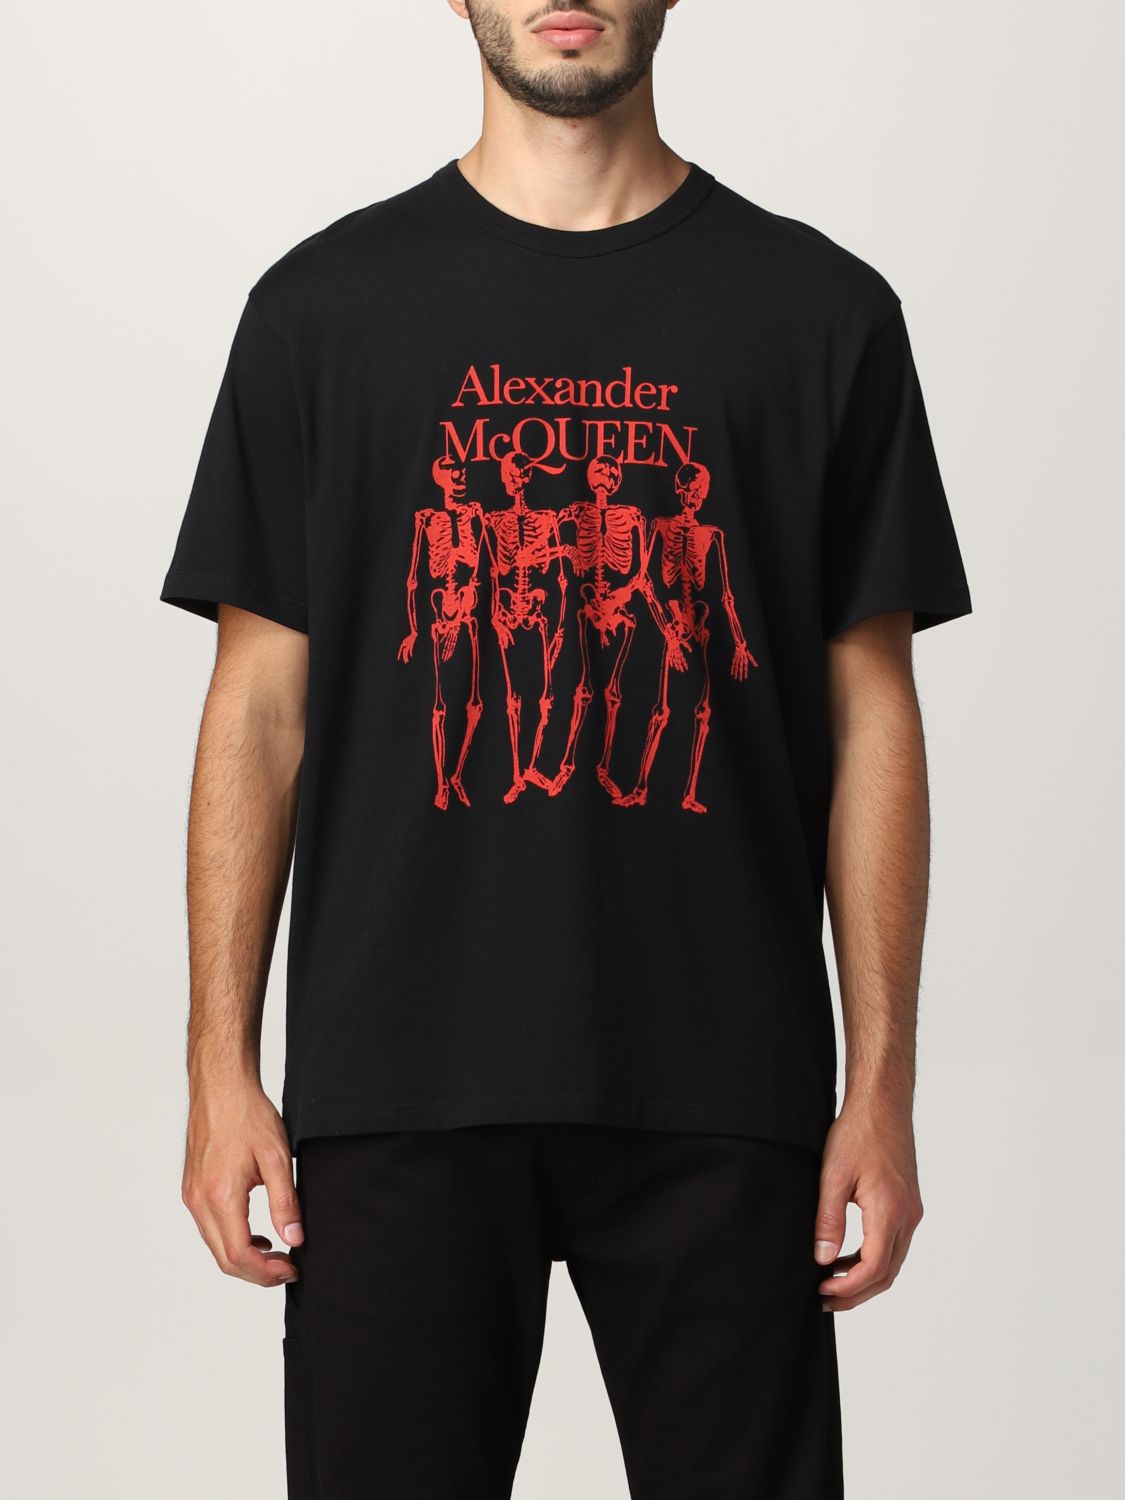 Alexander McQueen T-shirt with skeleton print